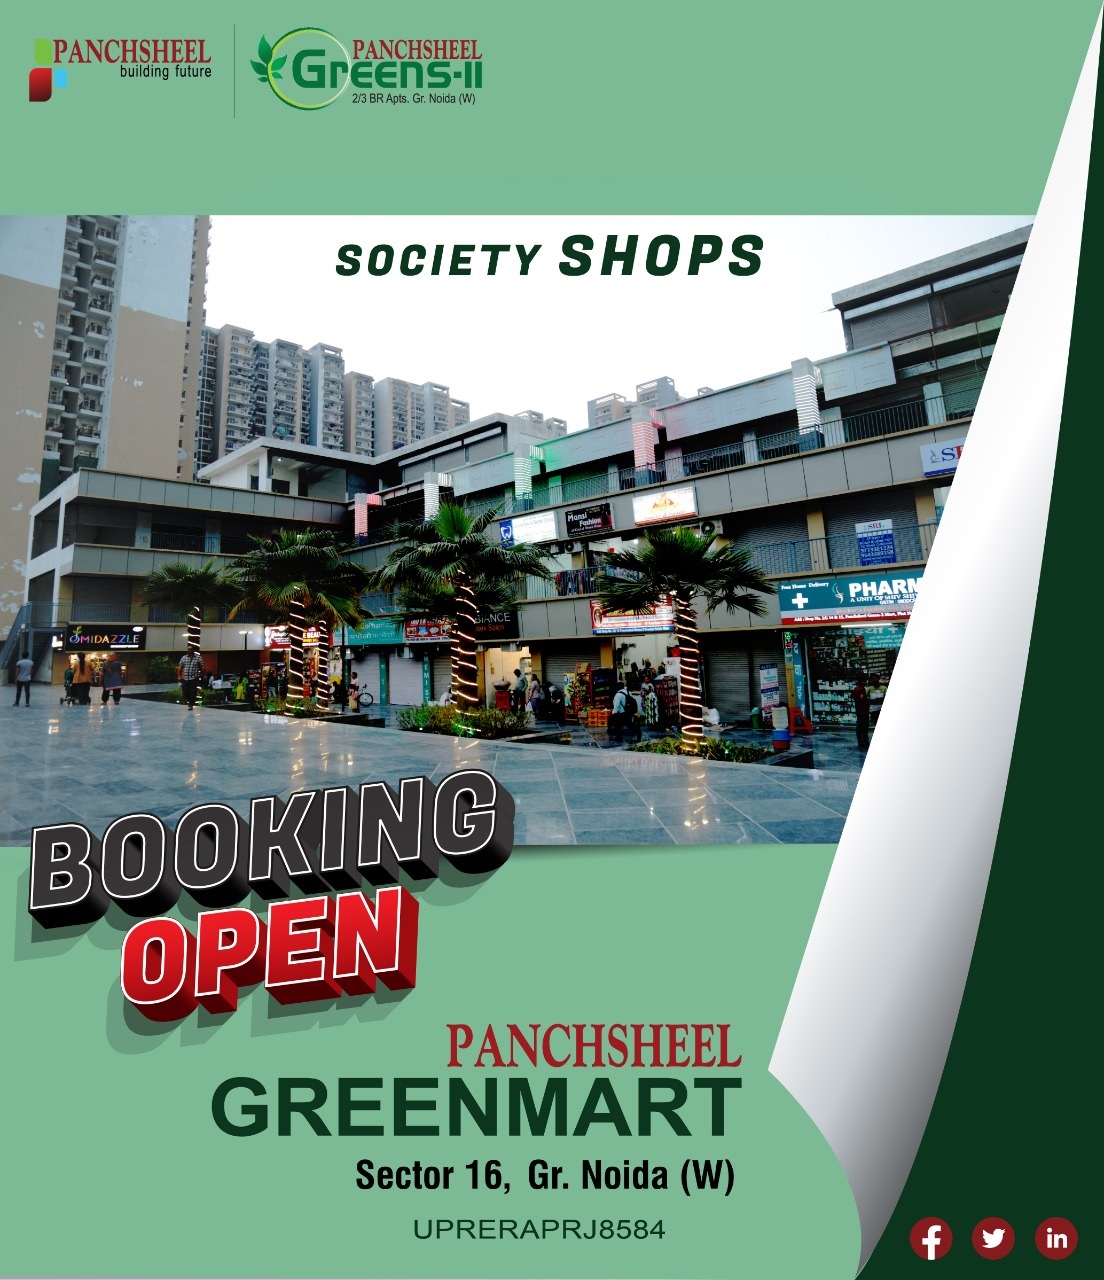 Booking open at Panchsheel Greensmart in Greater Noida Update